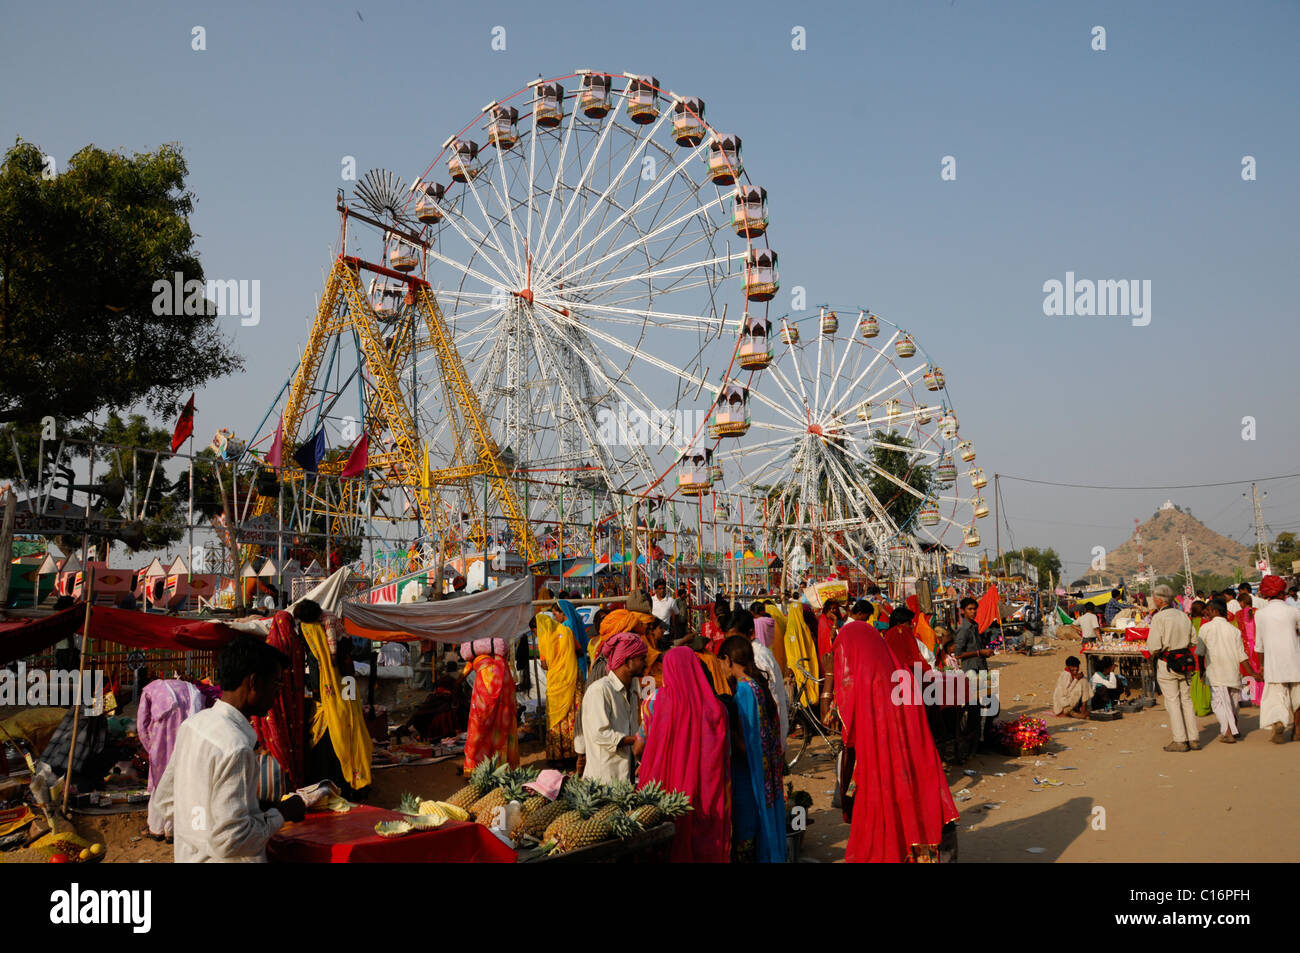 Ruedas de Ferris, Pushkar Mela, Pushkar, camello y mercado de ganado, Rajasthan, India del Norte, Asia Foto de stock